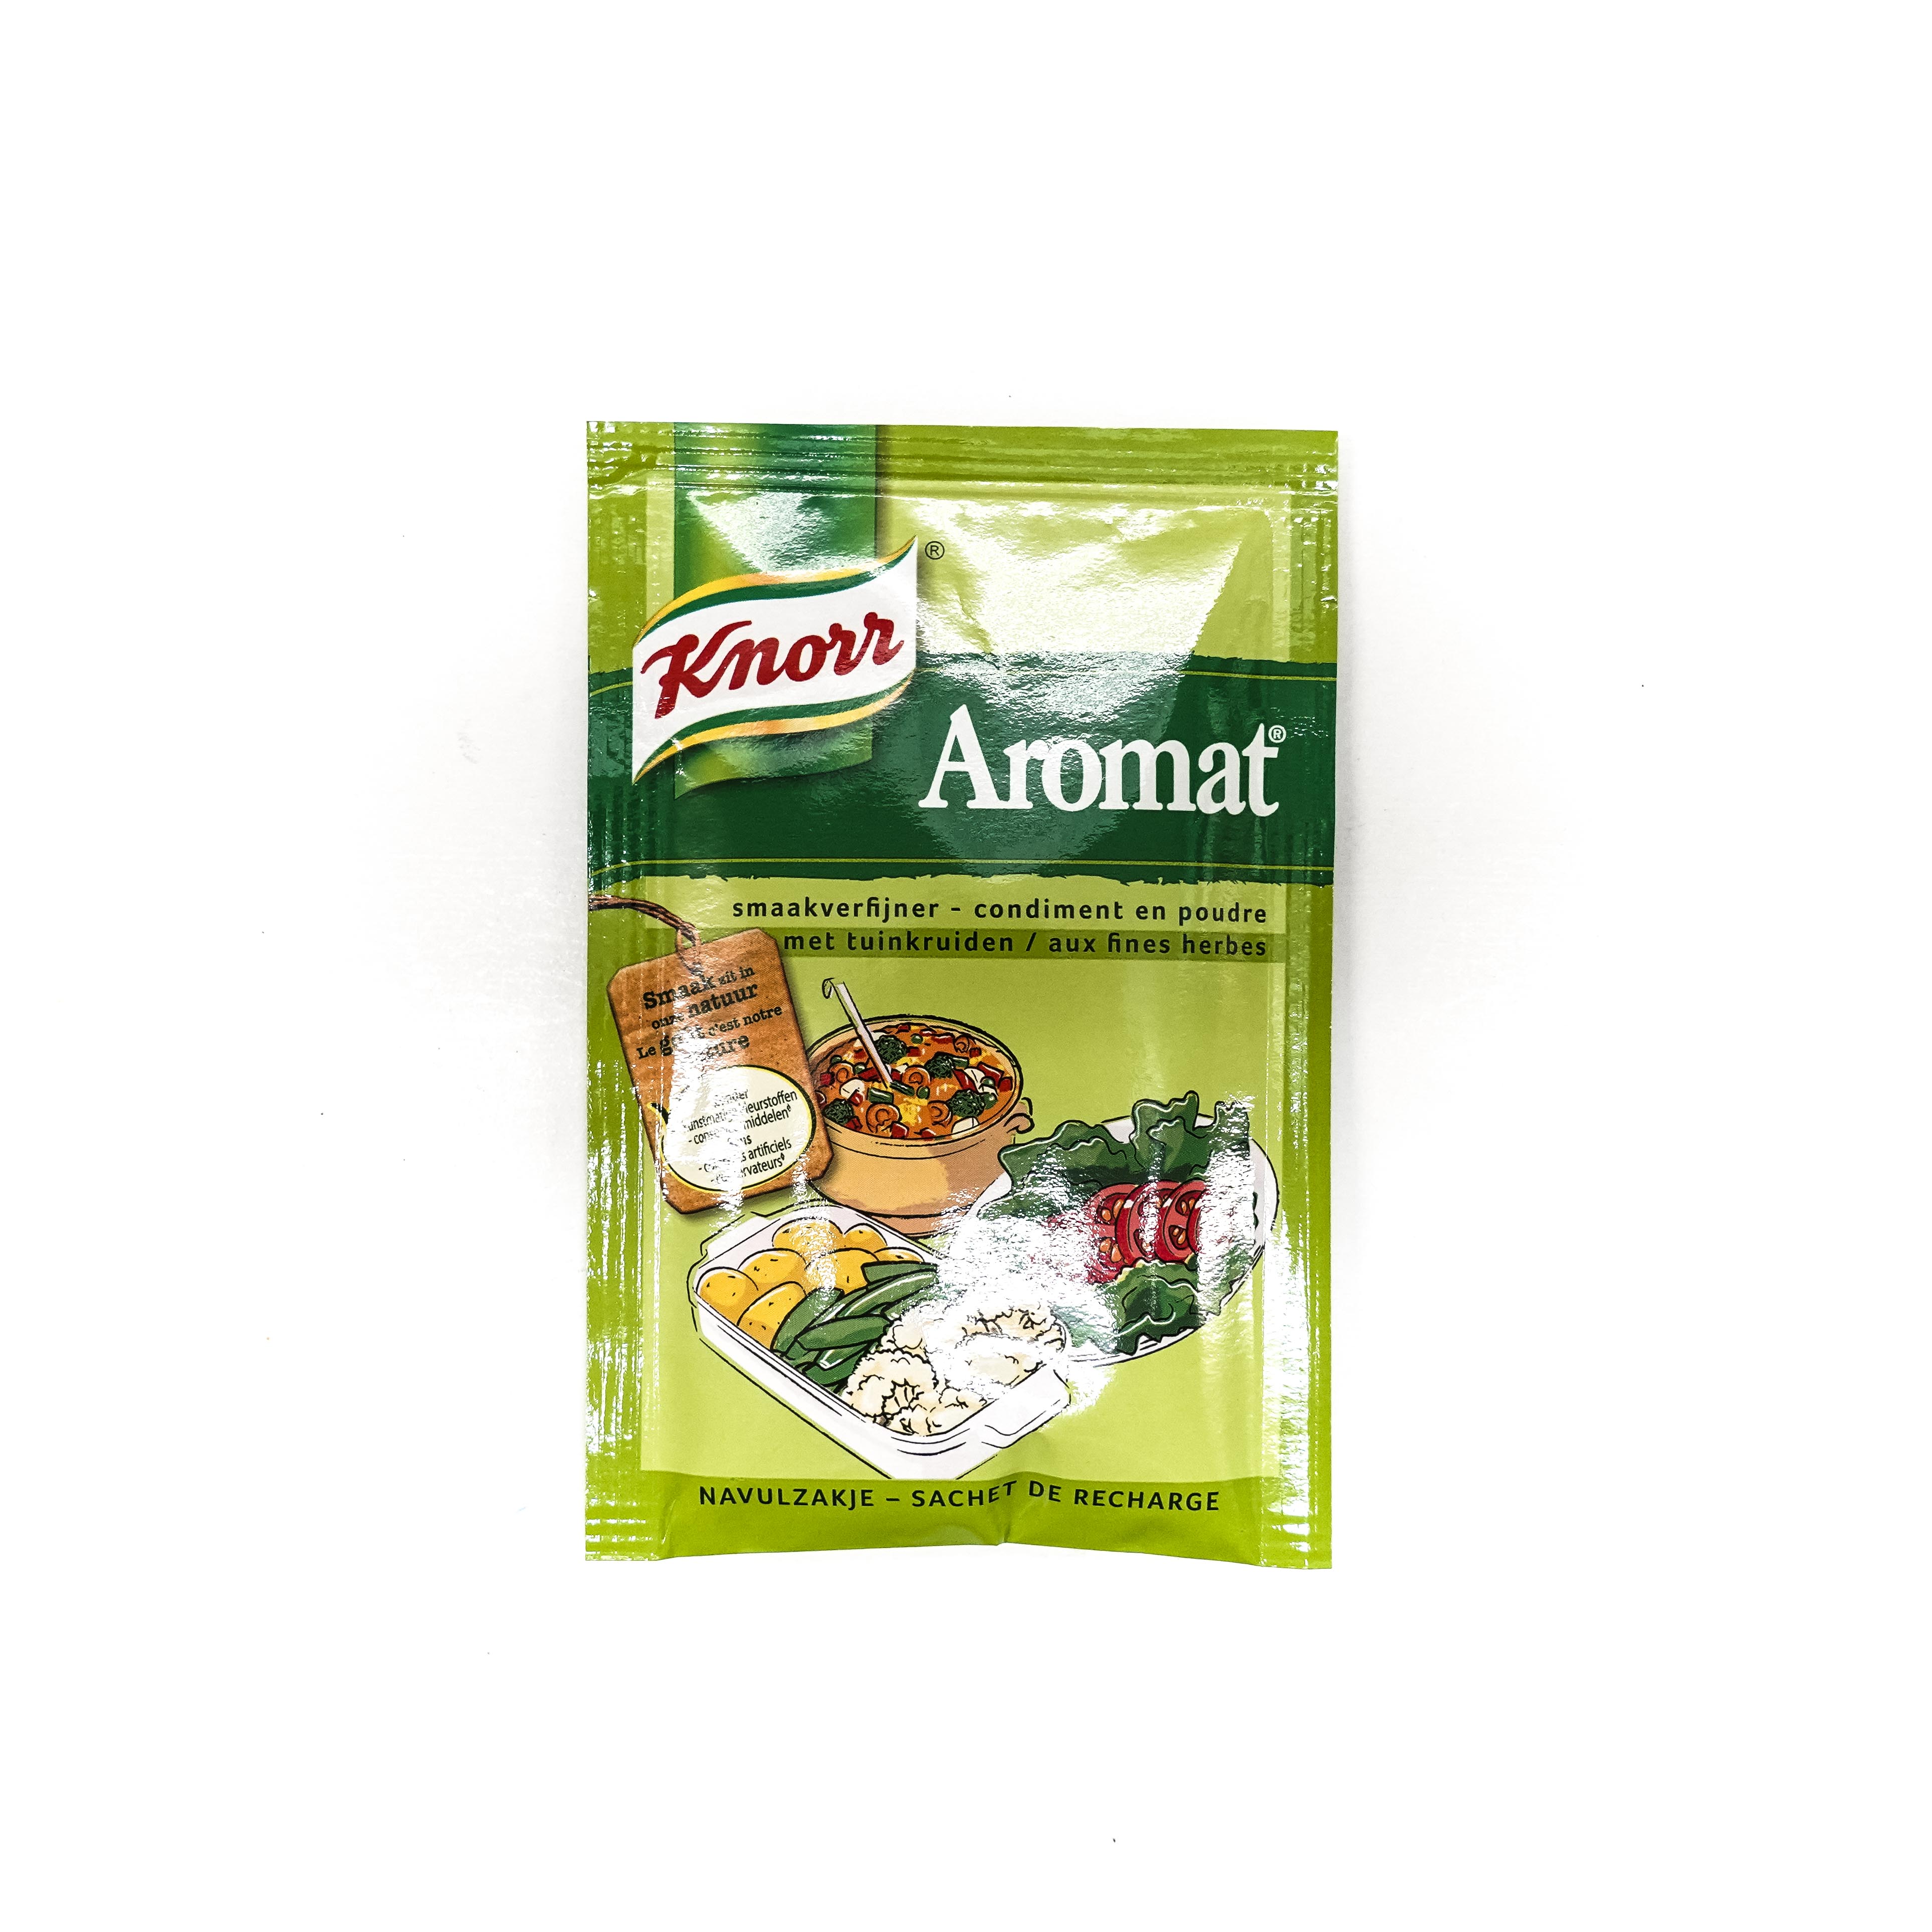 Knorr Aromat Seasoning Salt with Herbs Refill Pack